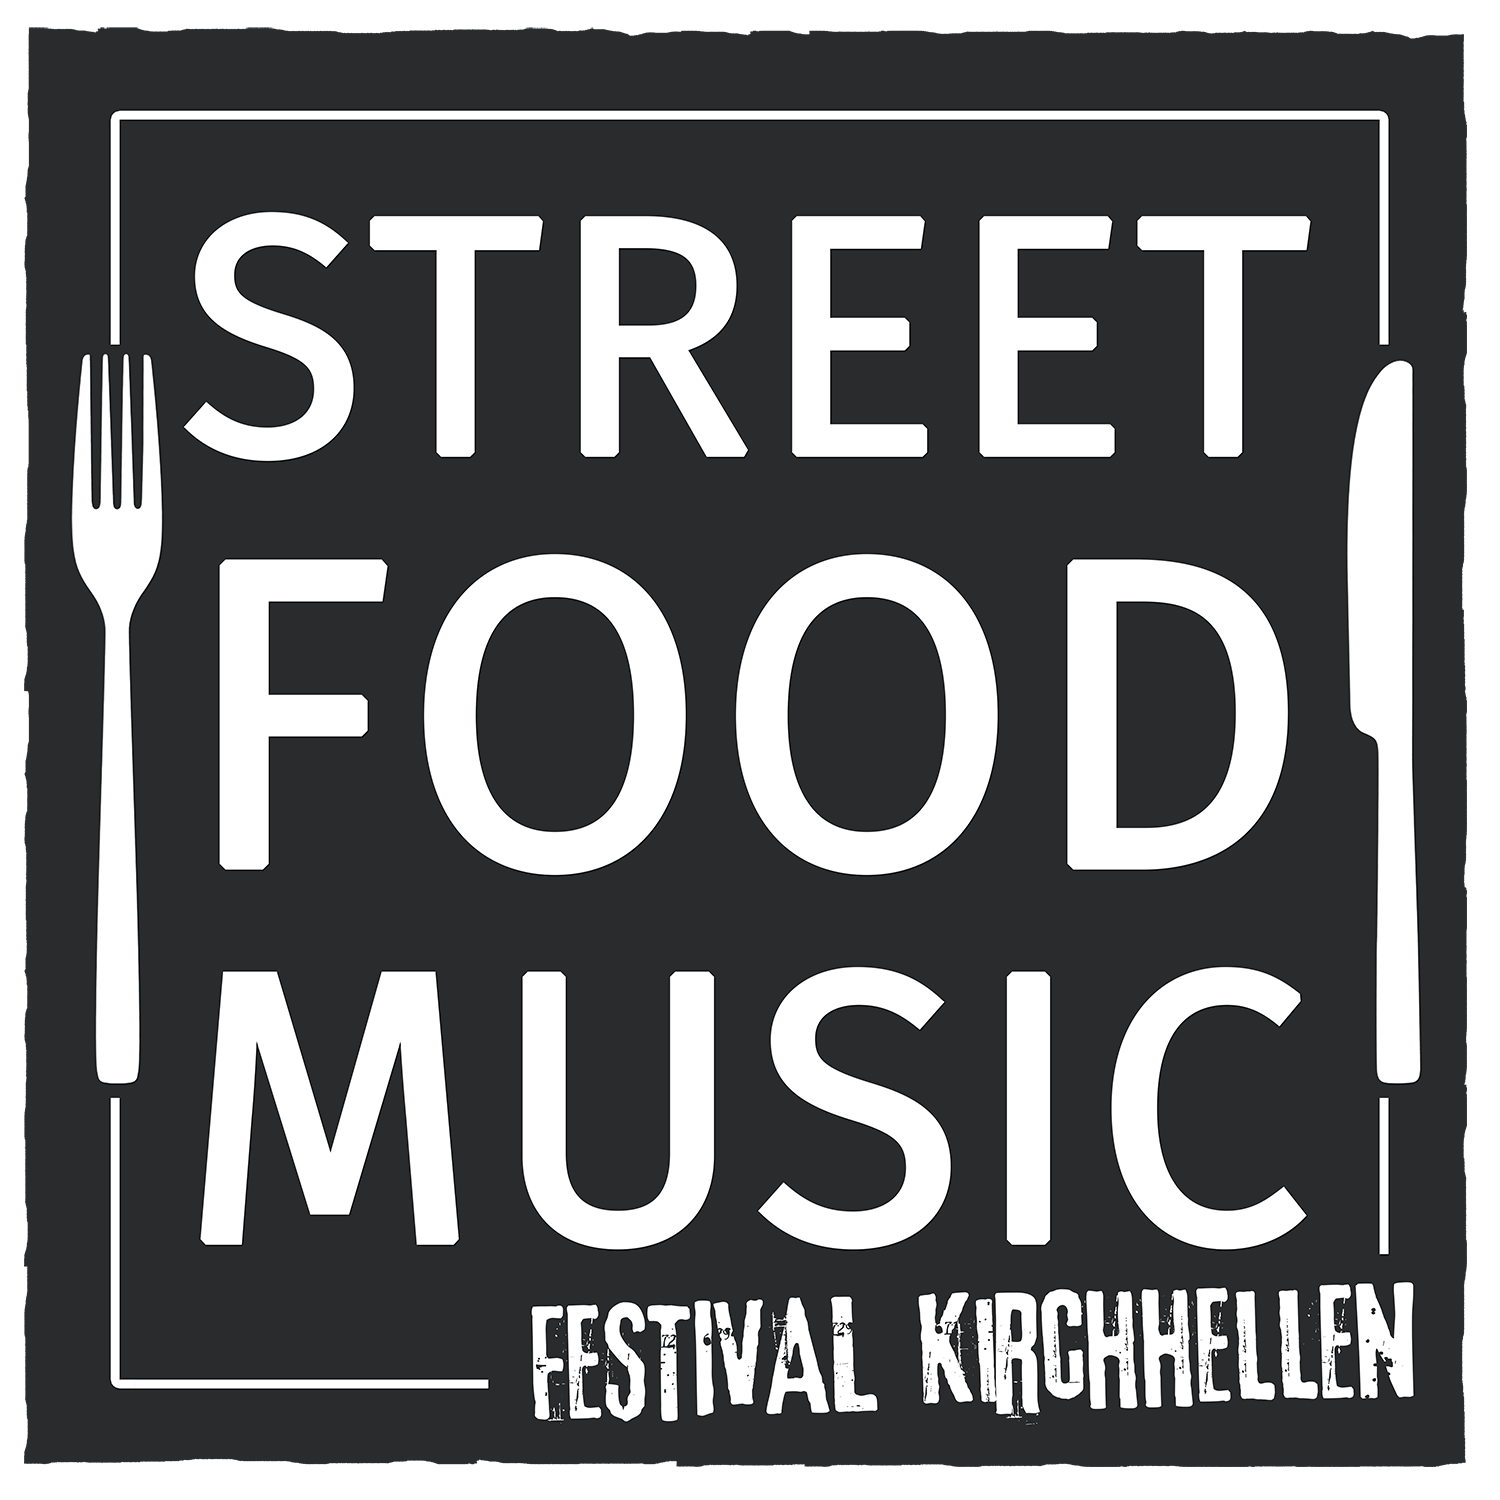 Street Food & Music Festival Bottrop Kirchhellen